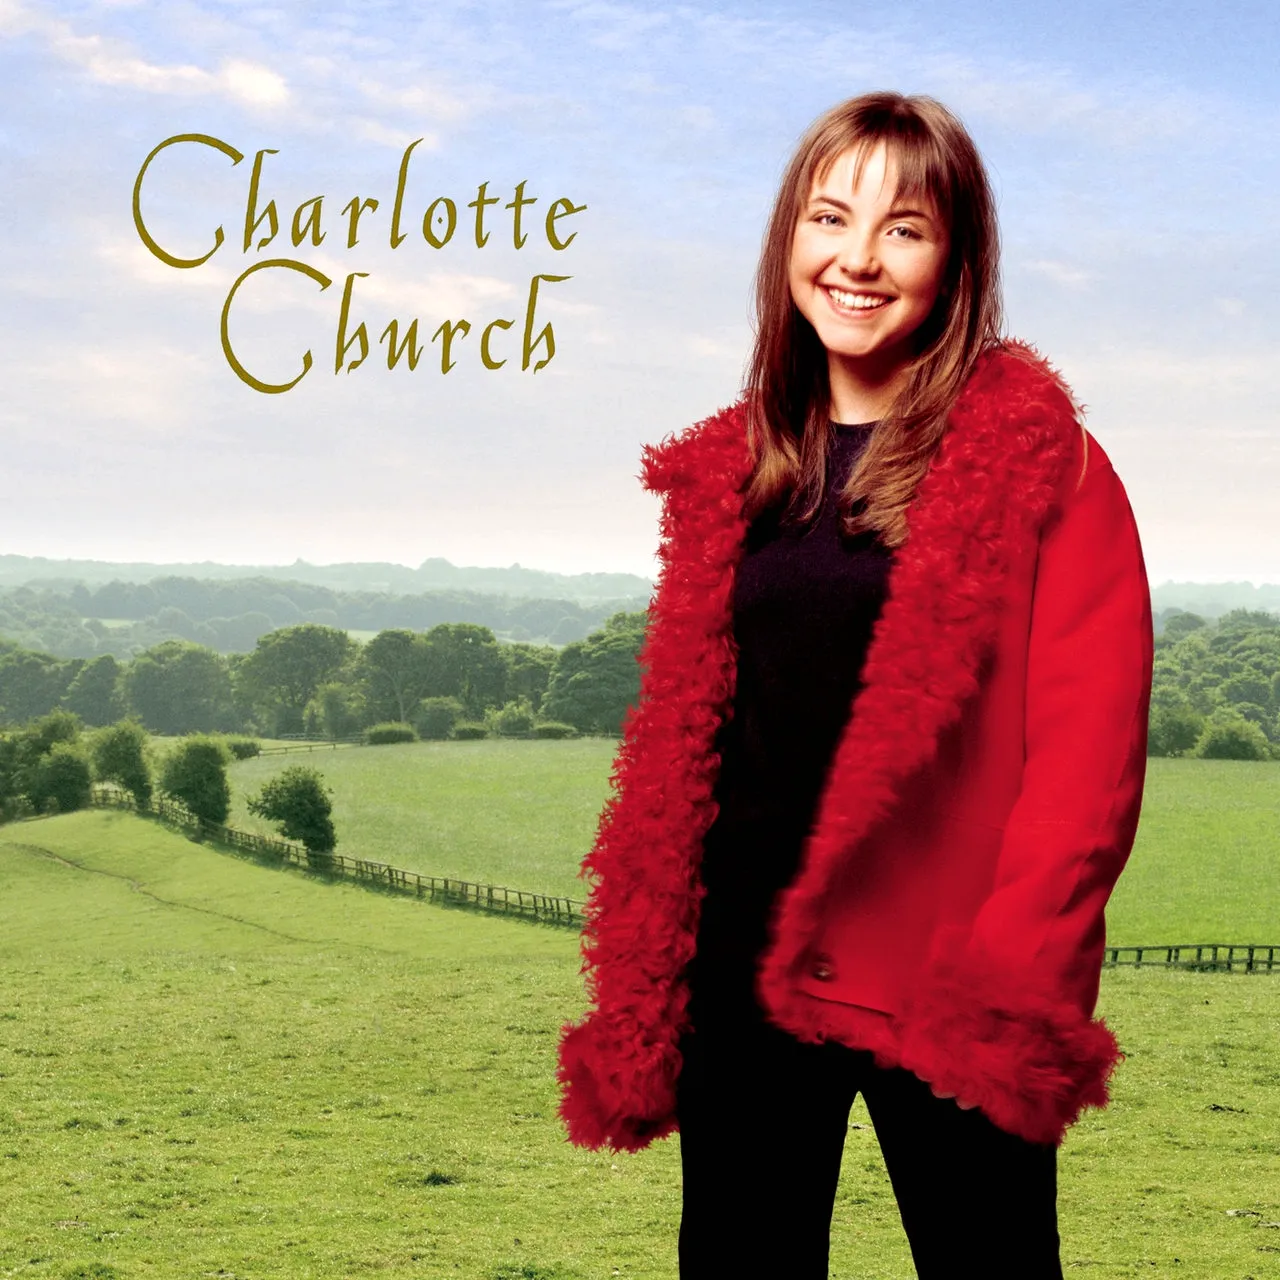 Charlotte Church albums